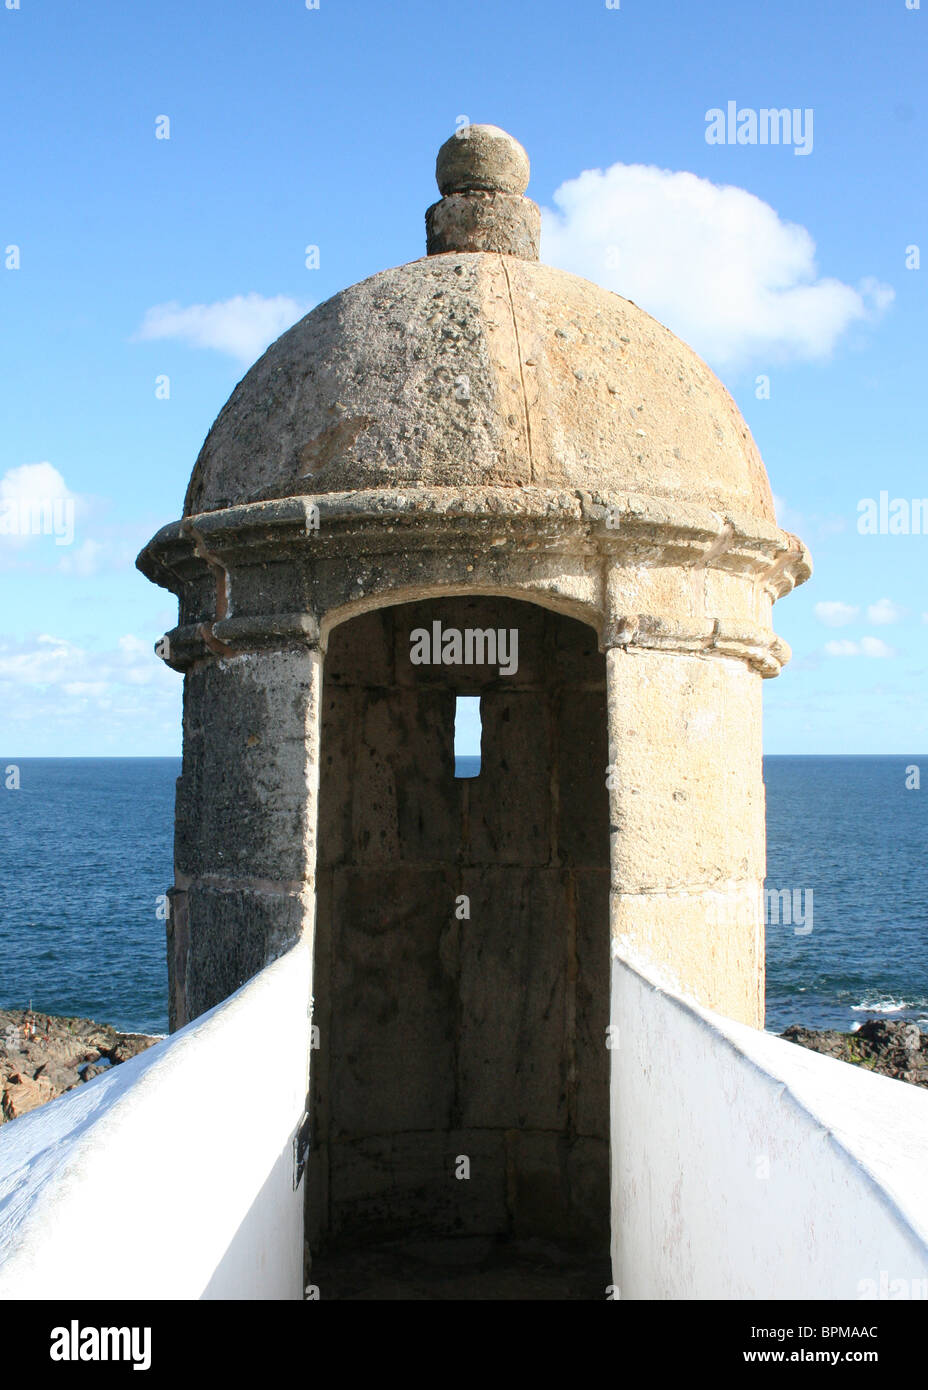 Turret at Baha lighthouse Stock Photo